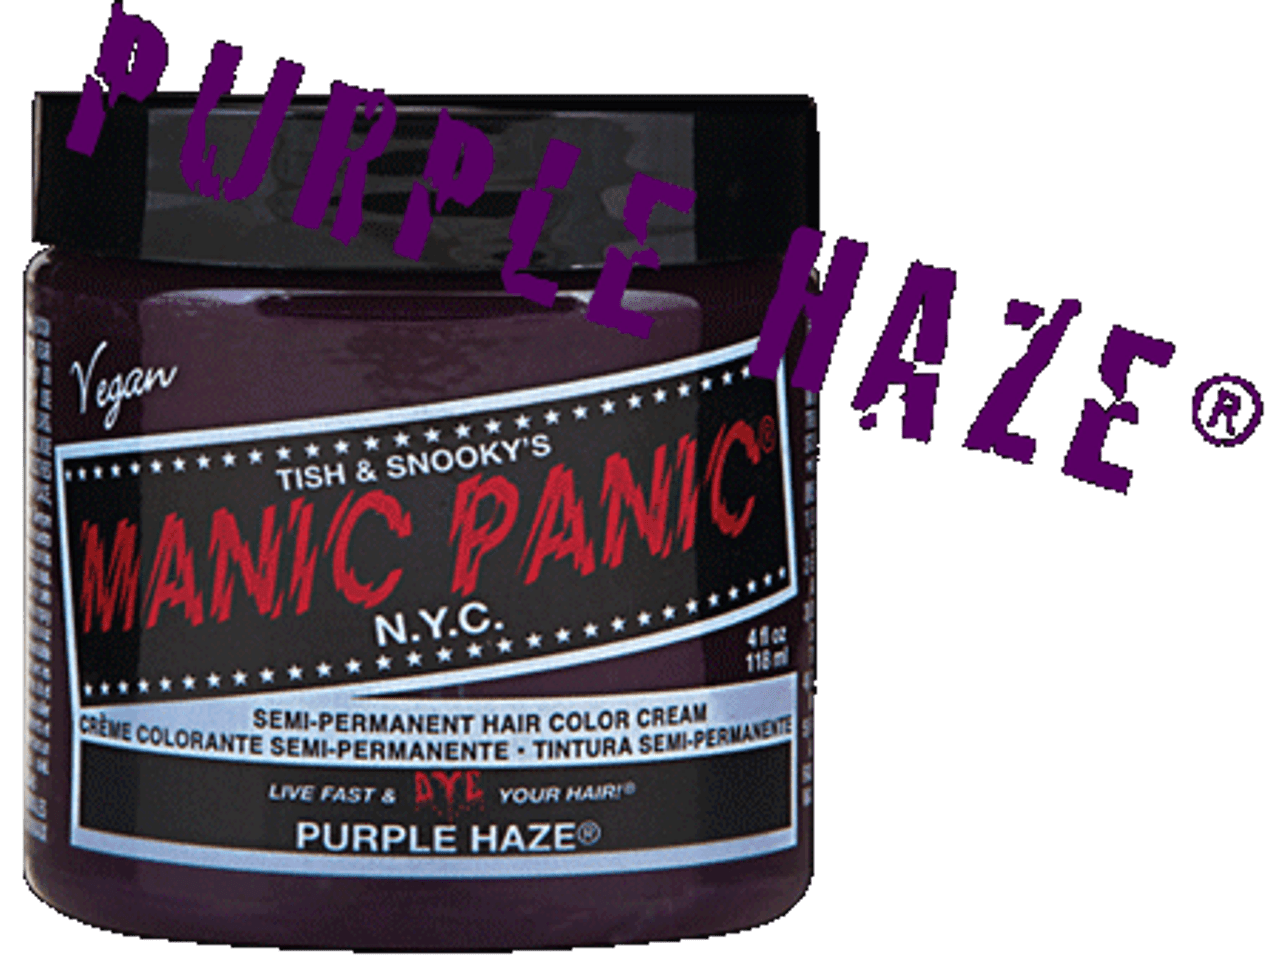 2. Manic Panic Semi-Permanent Hair Color Cream in Blue Steel - wide 9